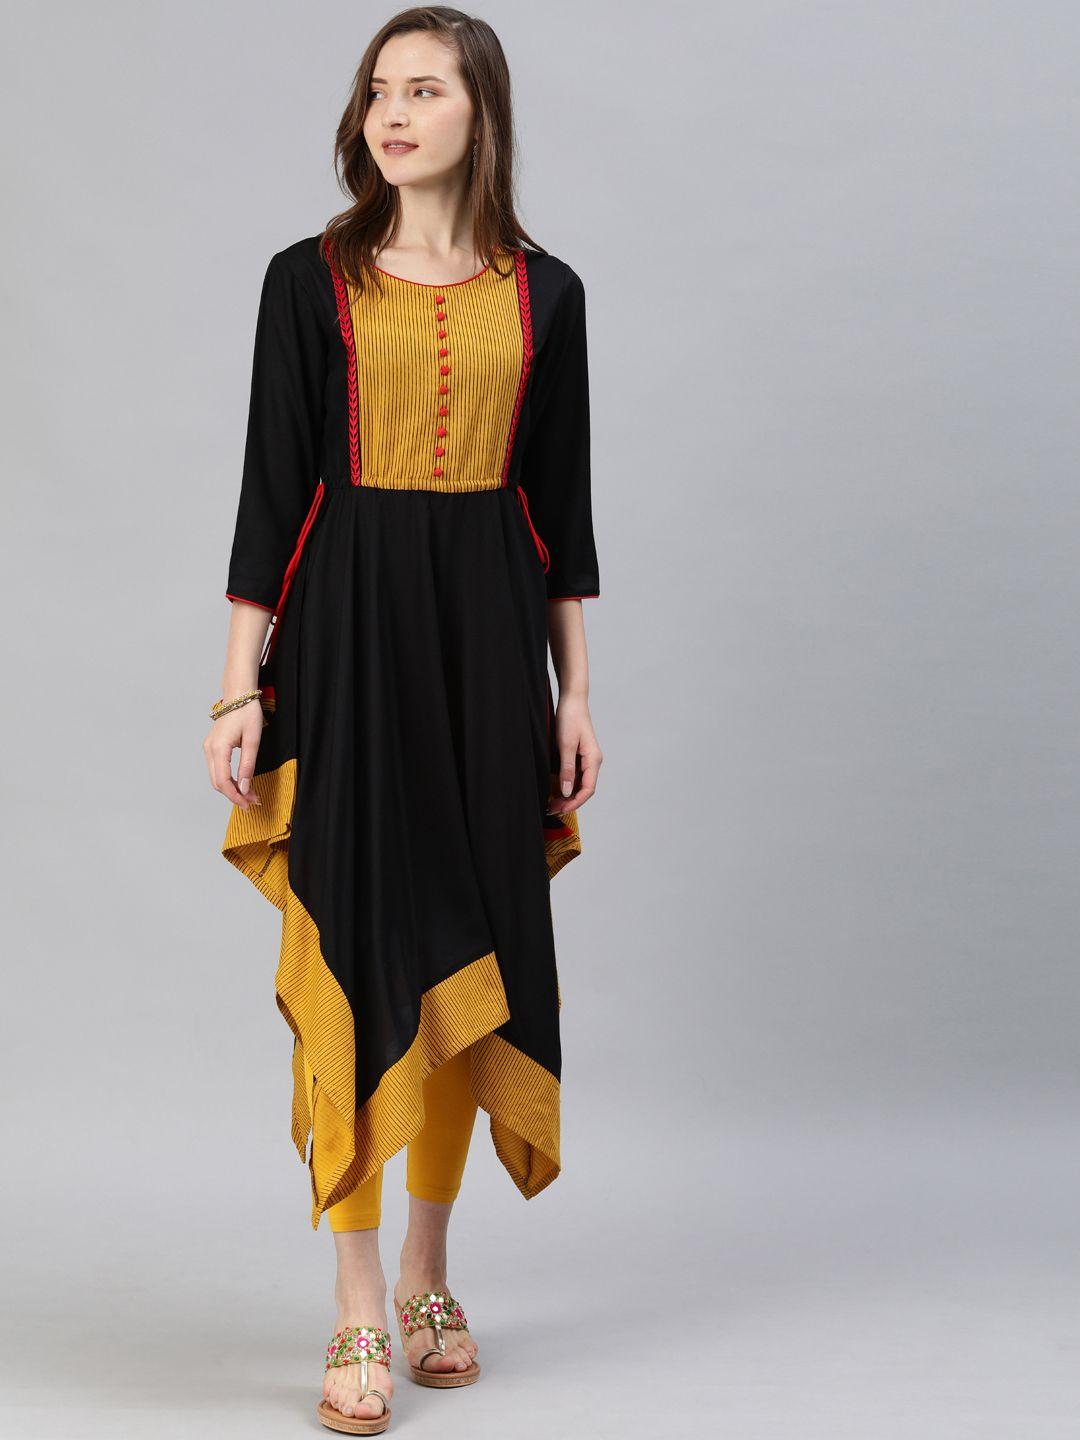 yash gallery women black & mustard yellow yoke design a-line kurta with embroidered detail